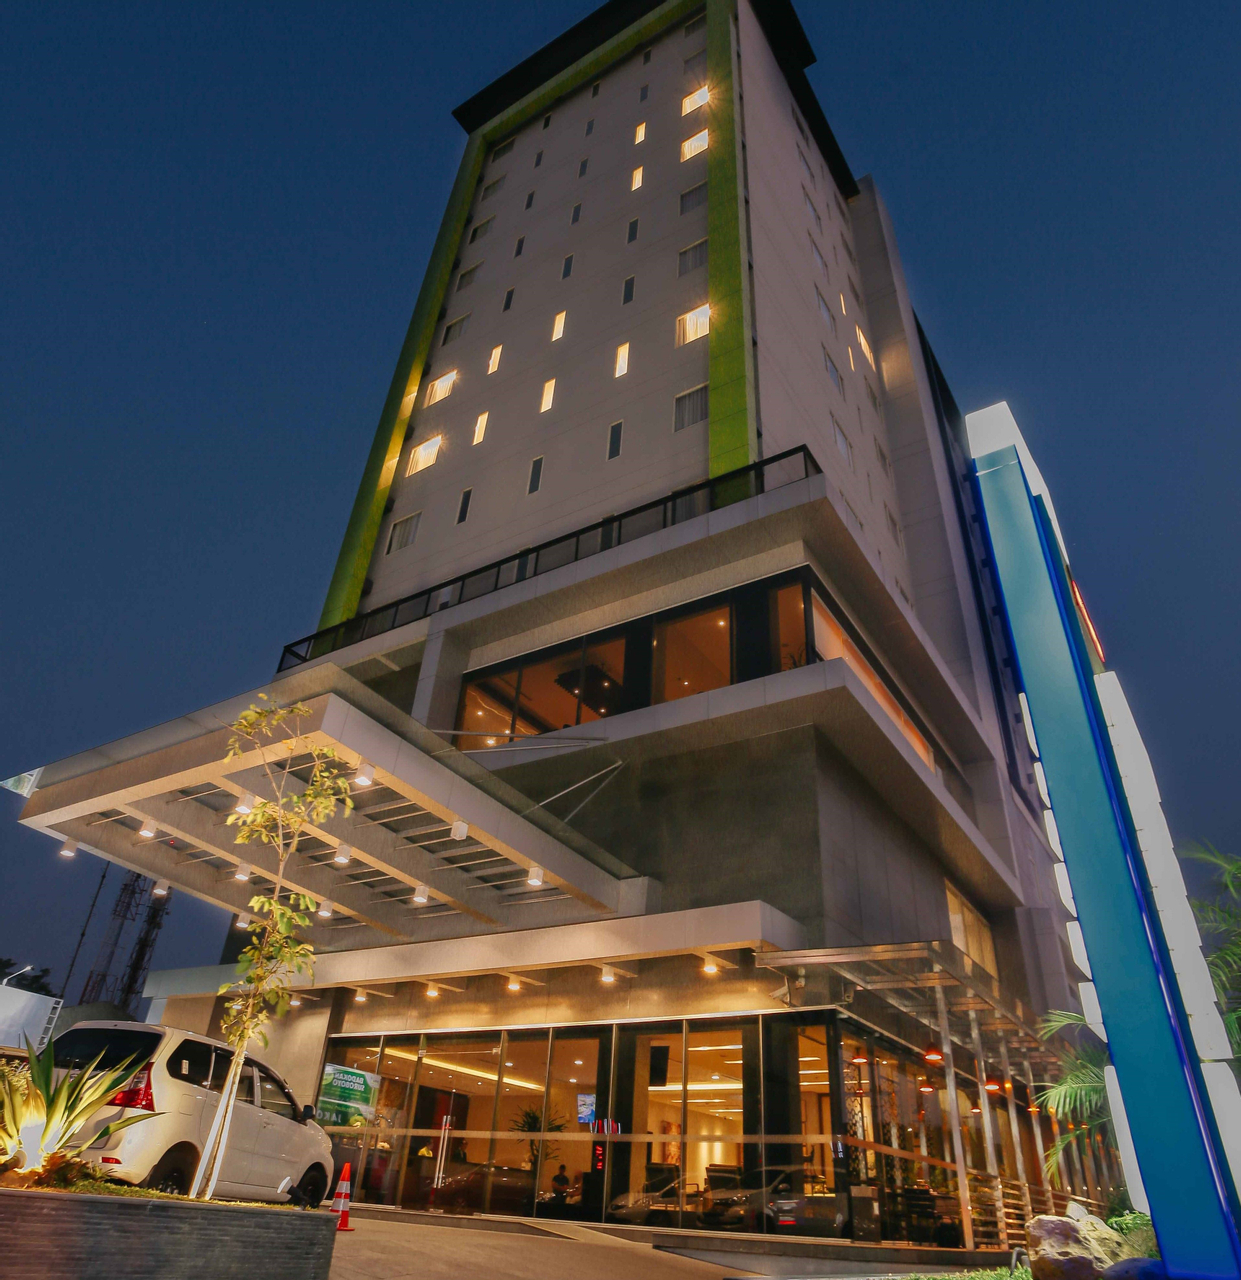 Exterior & Views 1, PrimeBiz Hotel Surabaya, Surabaya